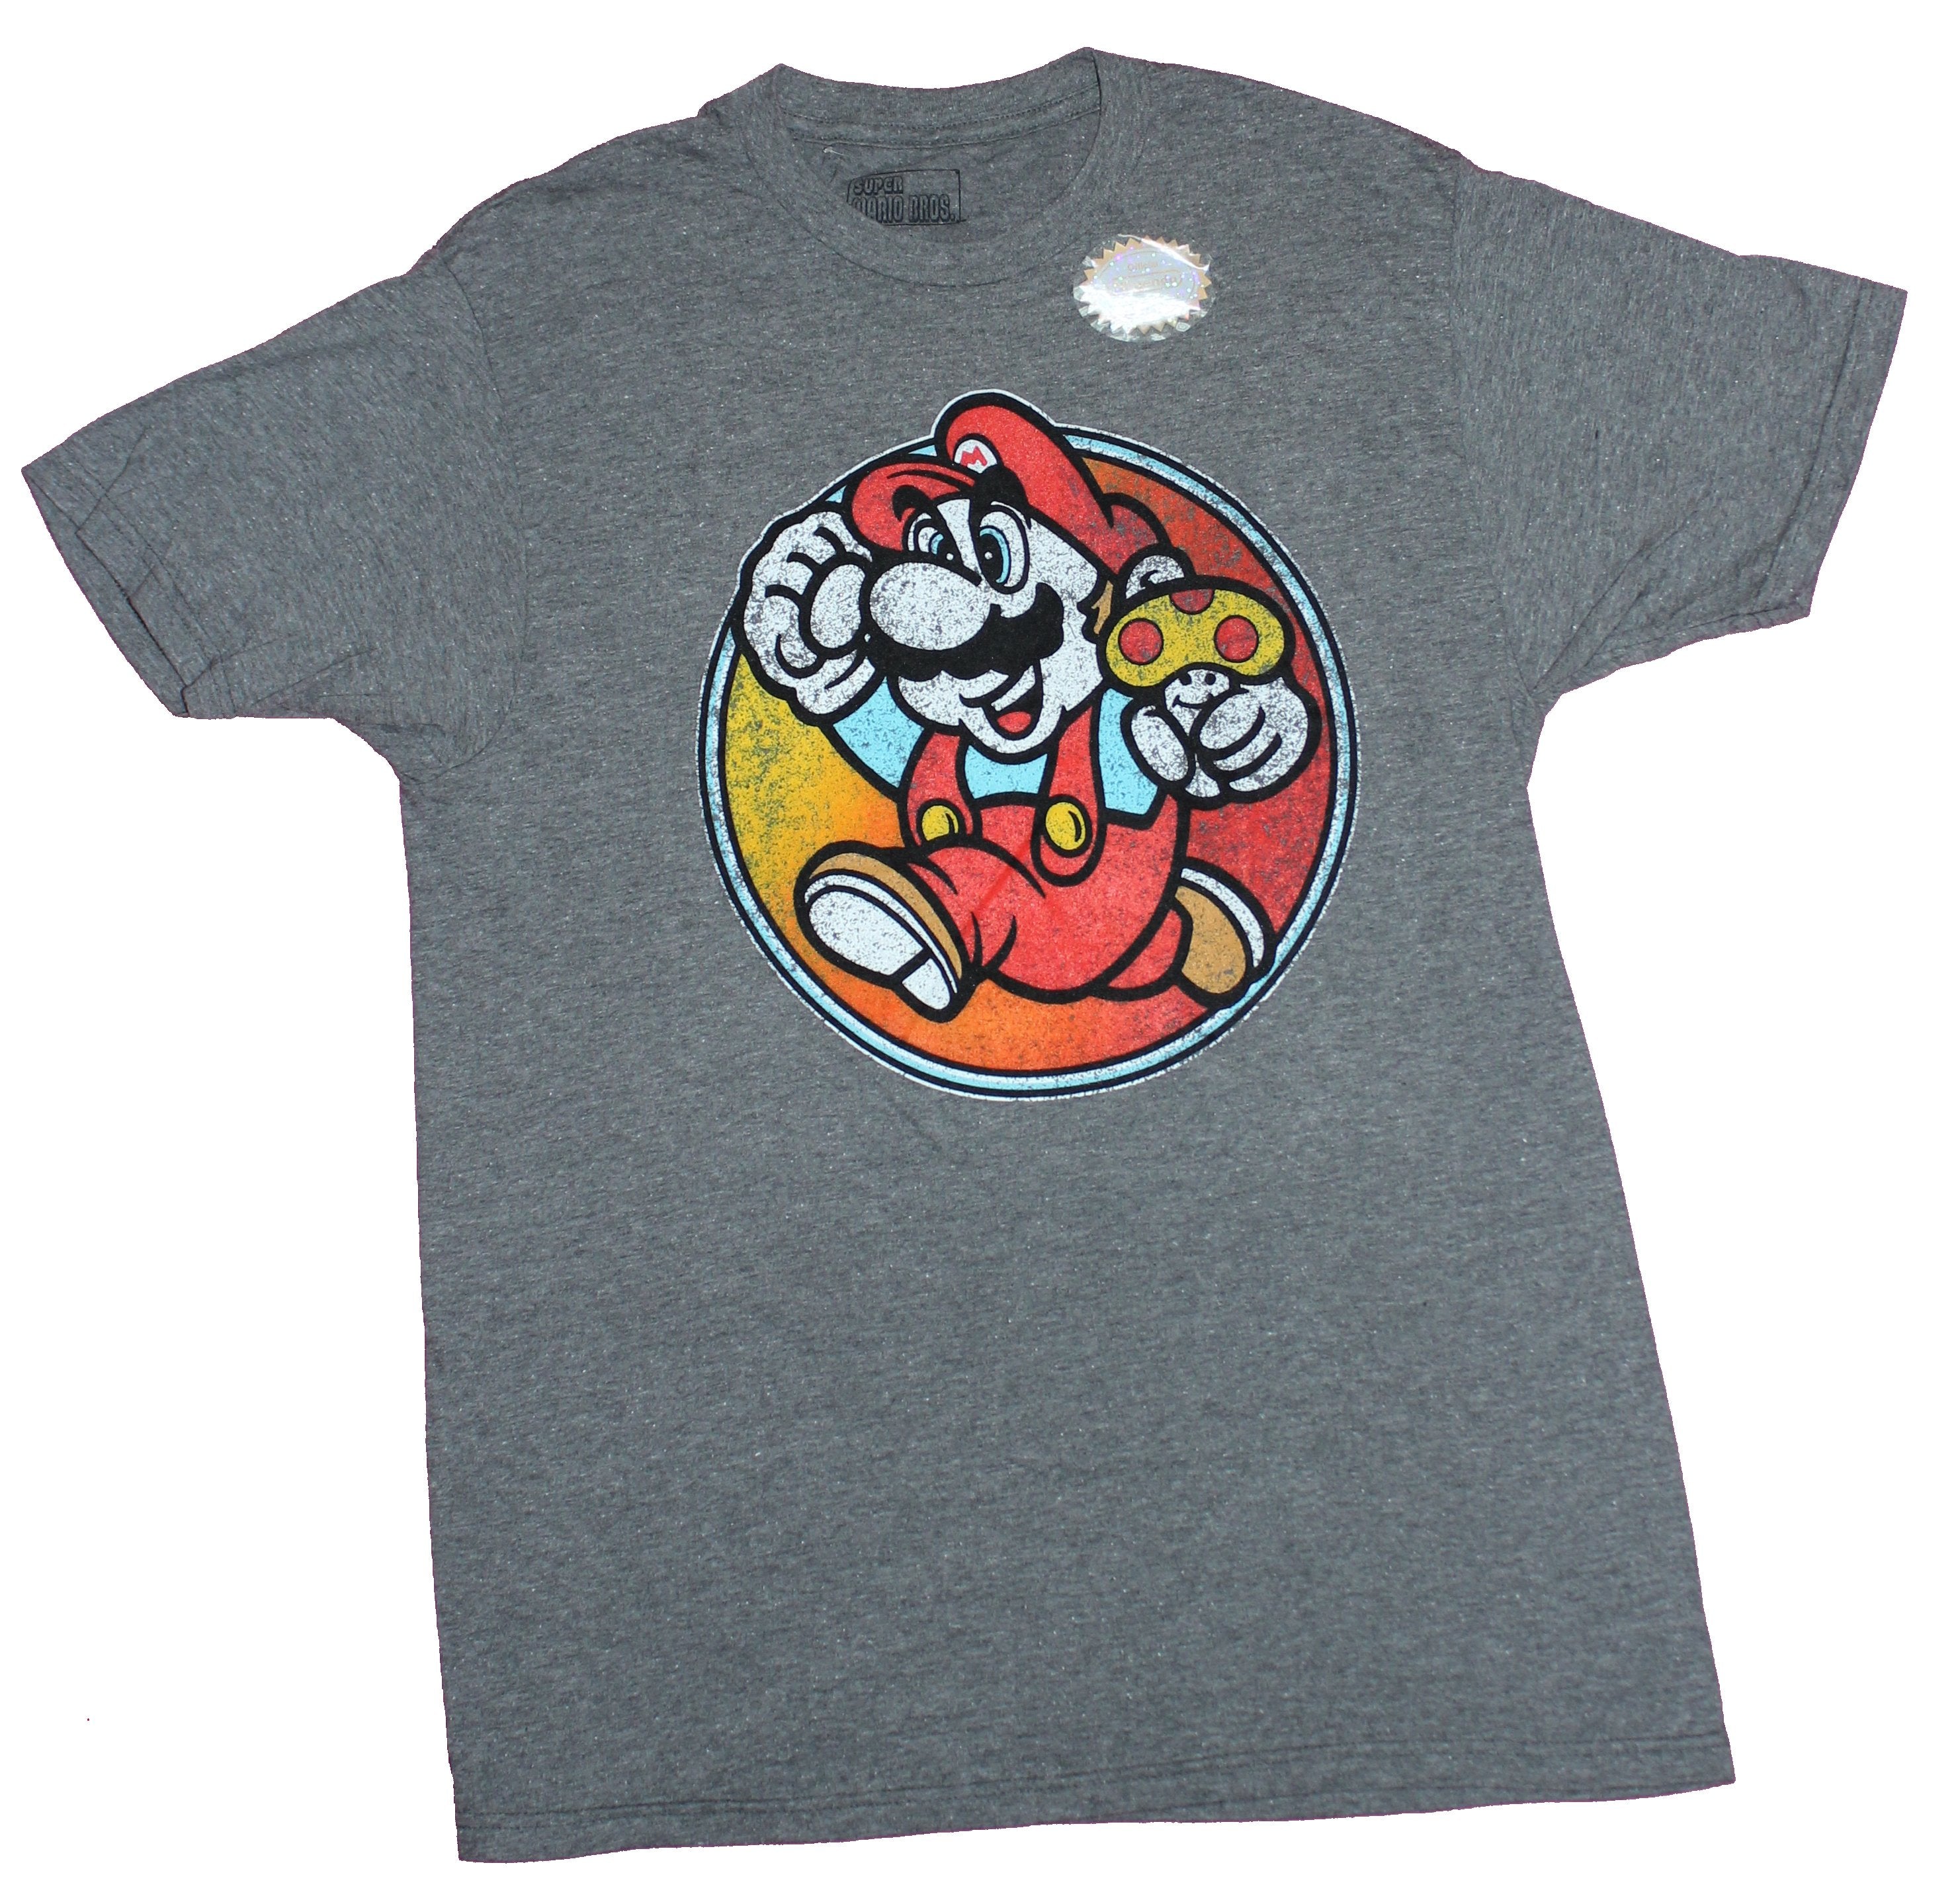 Super Mario Brothers Mens T-Shirt - Mario With A Mushroom in Circle Image